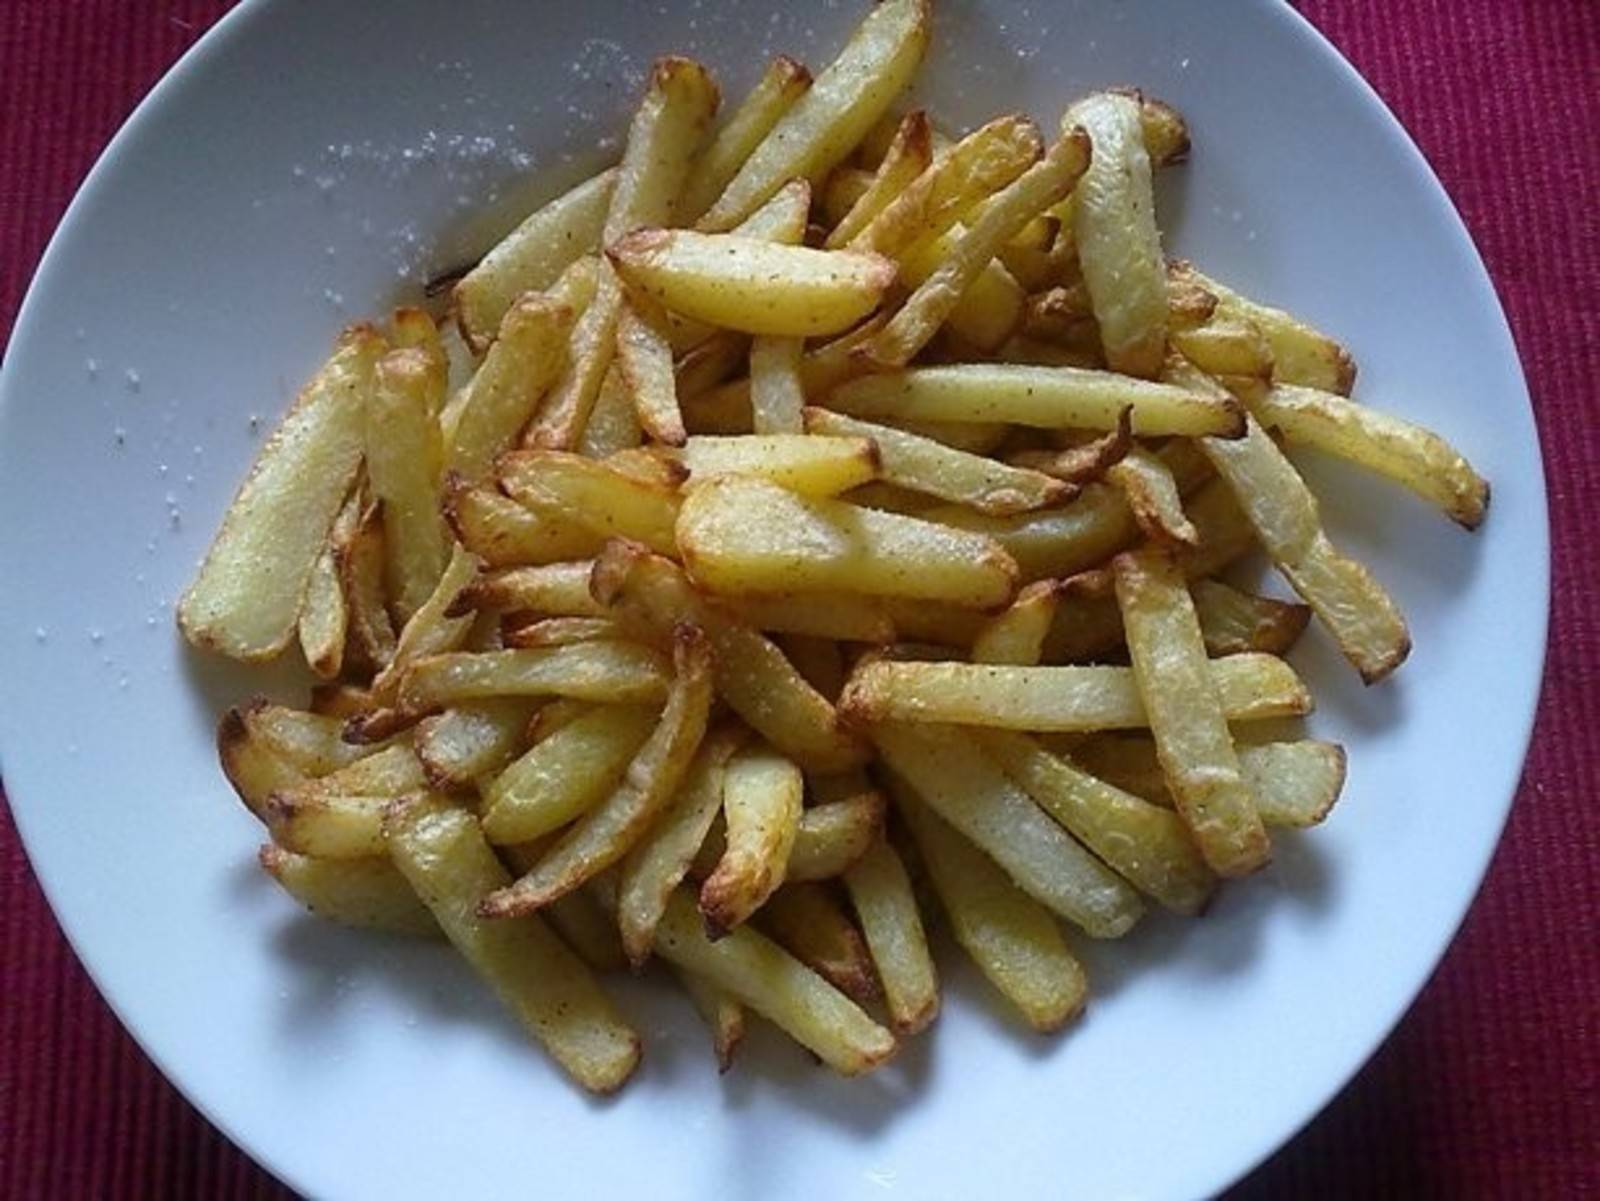 Pommes frites aus der Heißluftfritteuse